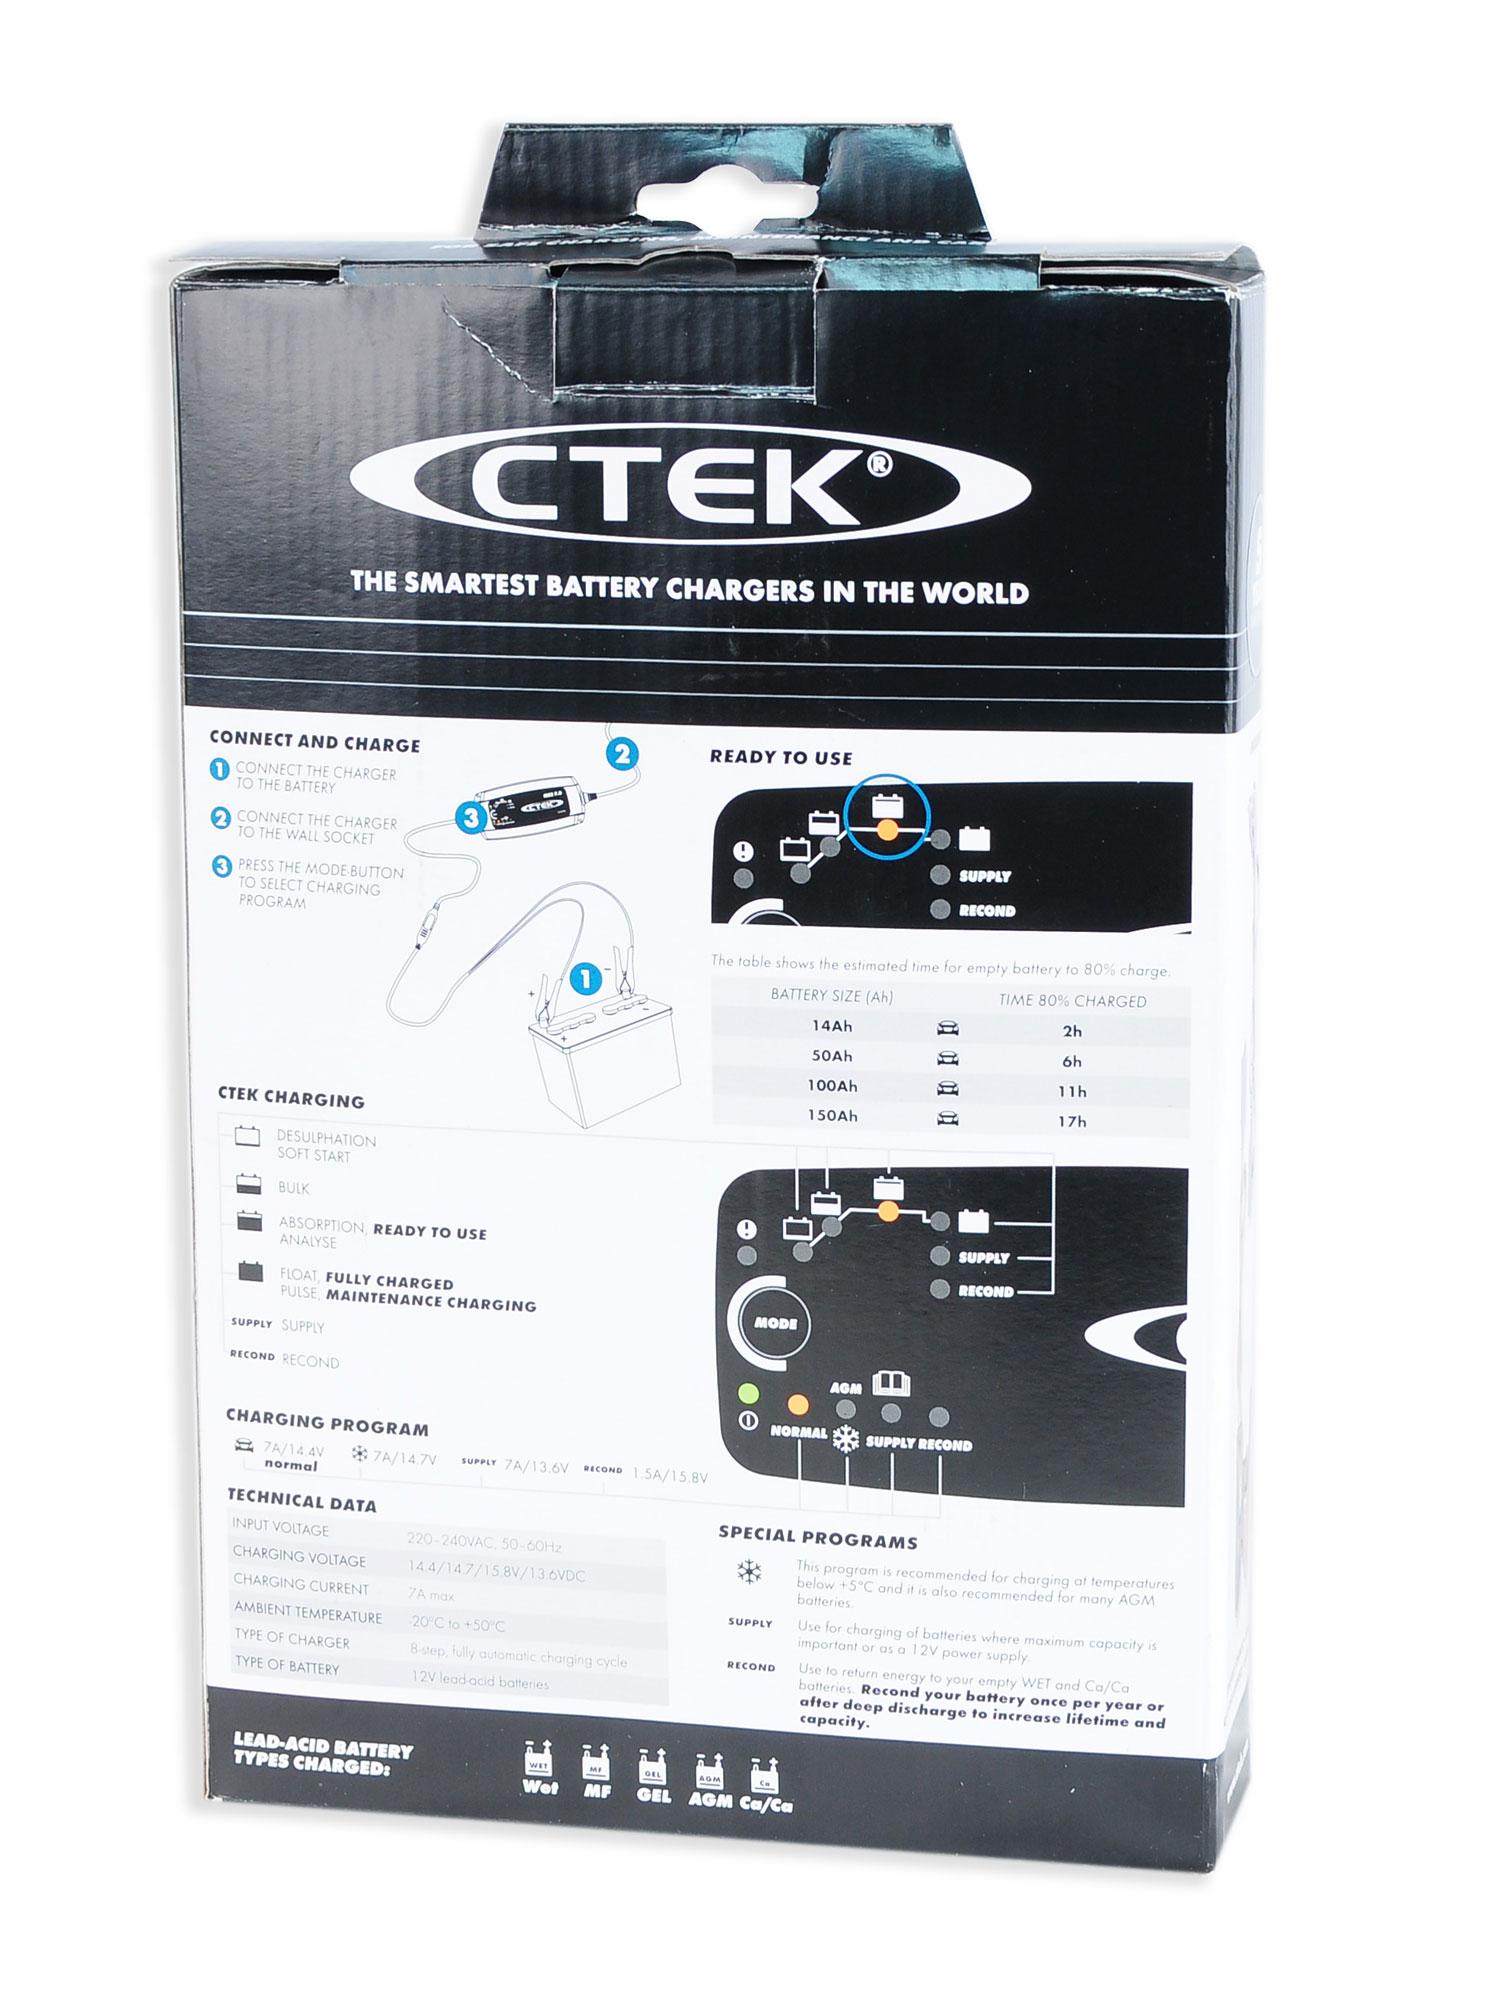 Ctek MXS 7.0 Batterieladegerät 12 V 7 A